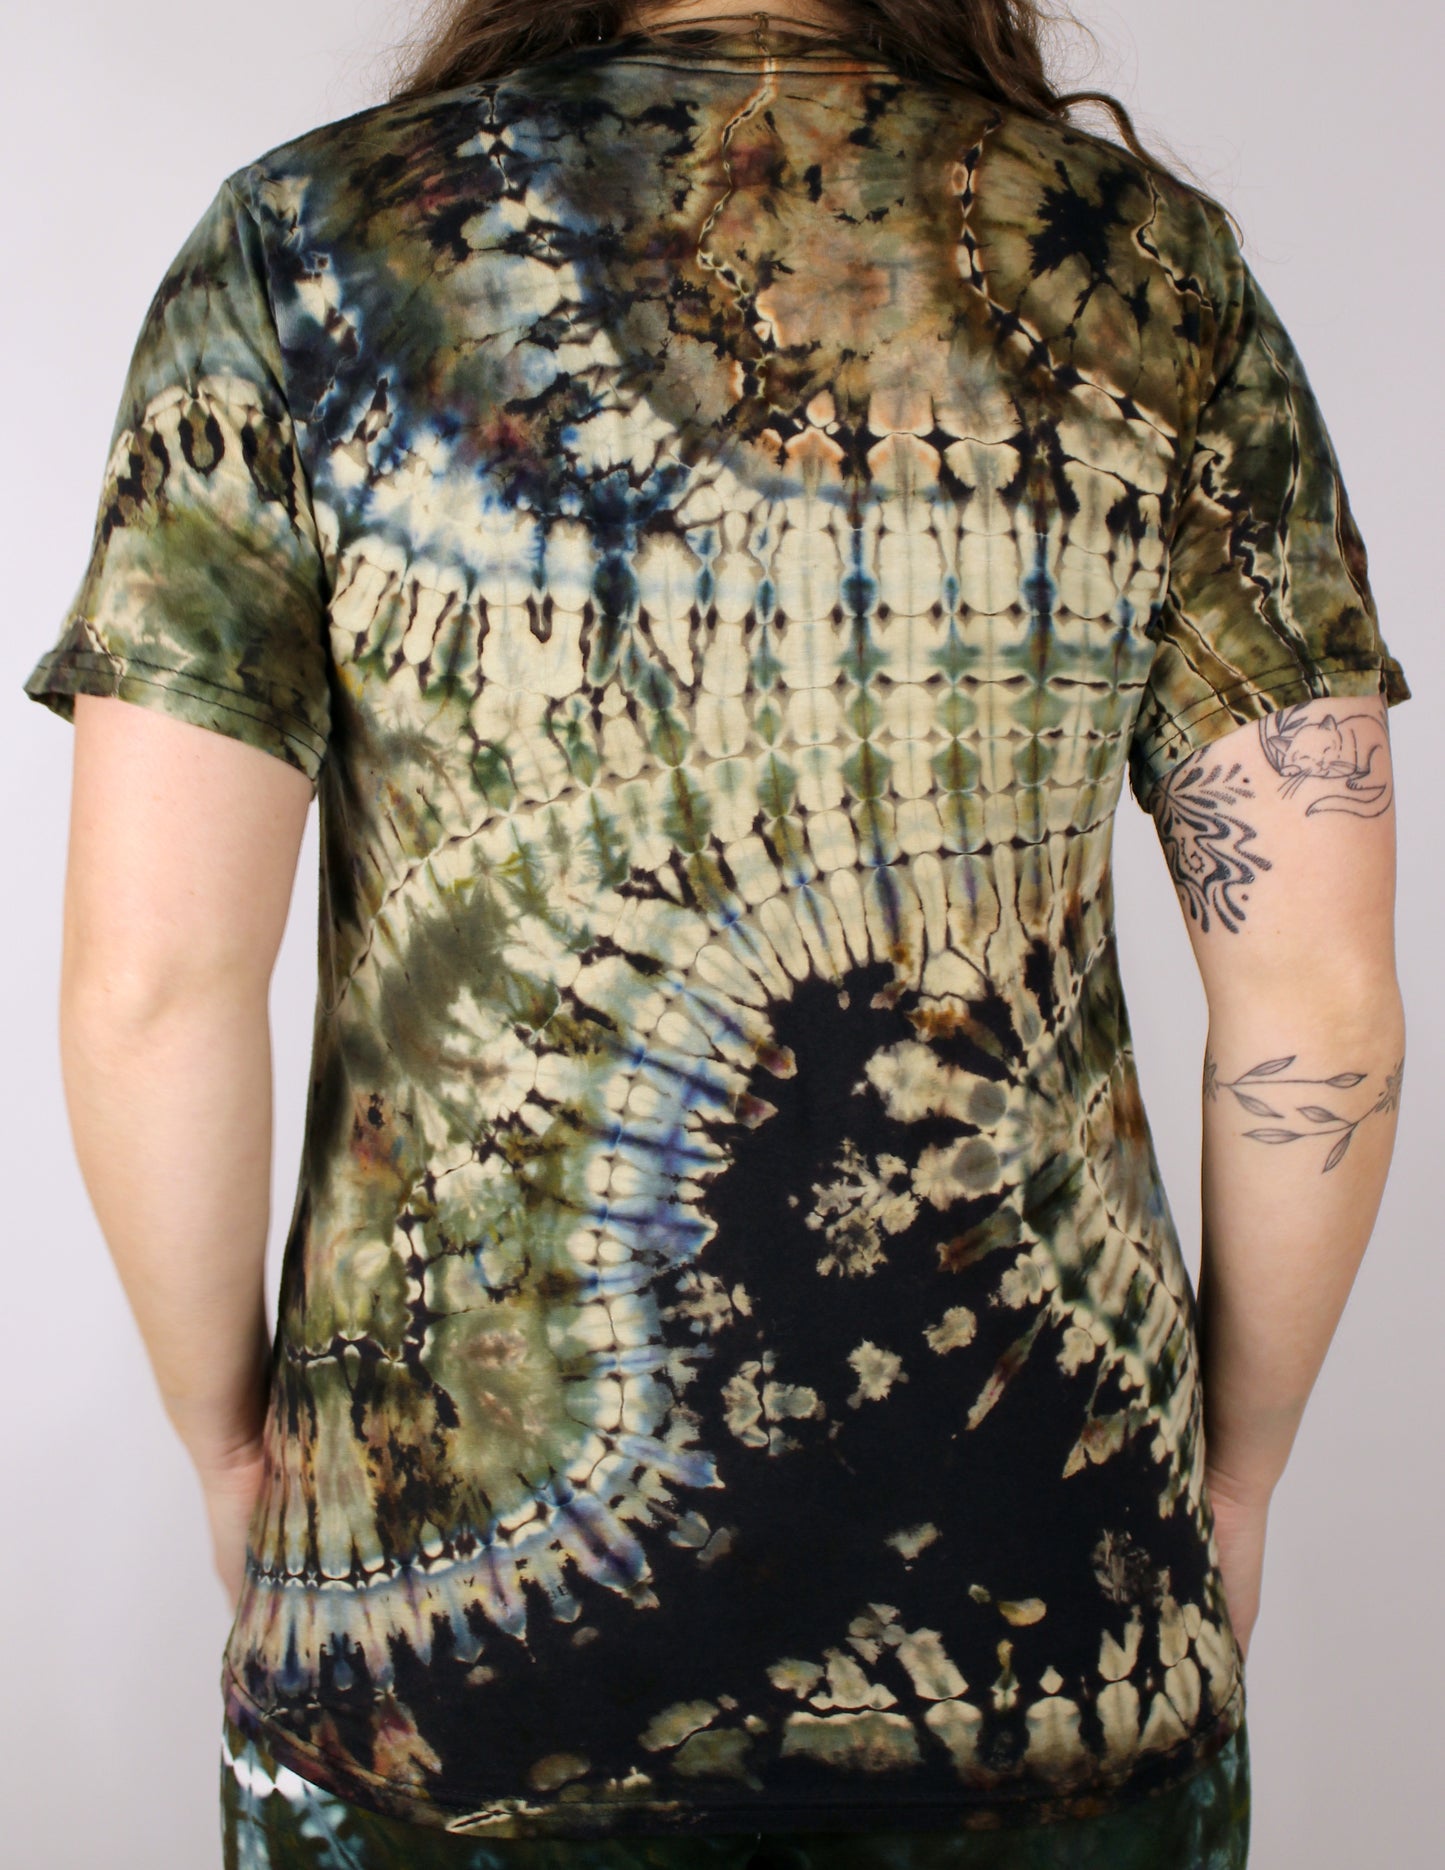 M - “Black Squid Ink” Reverse Dyed Tee Shirt